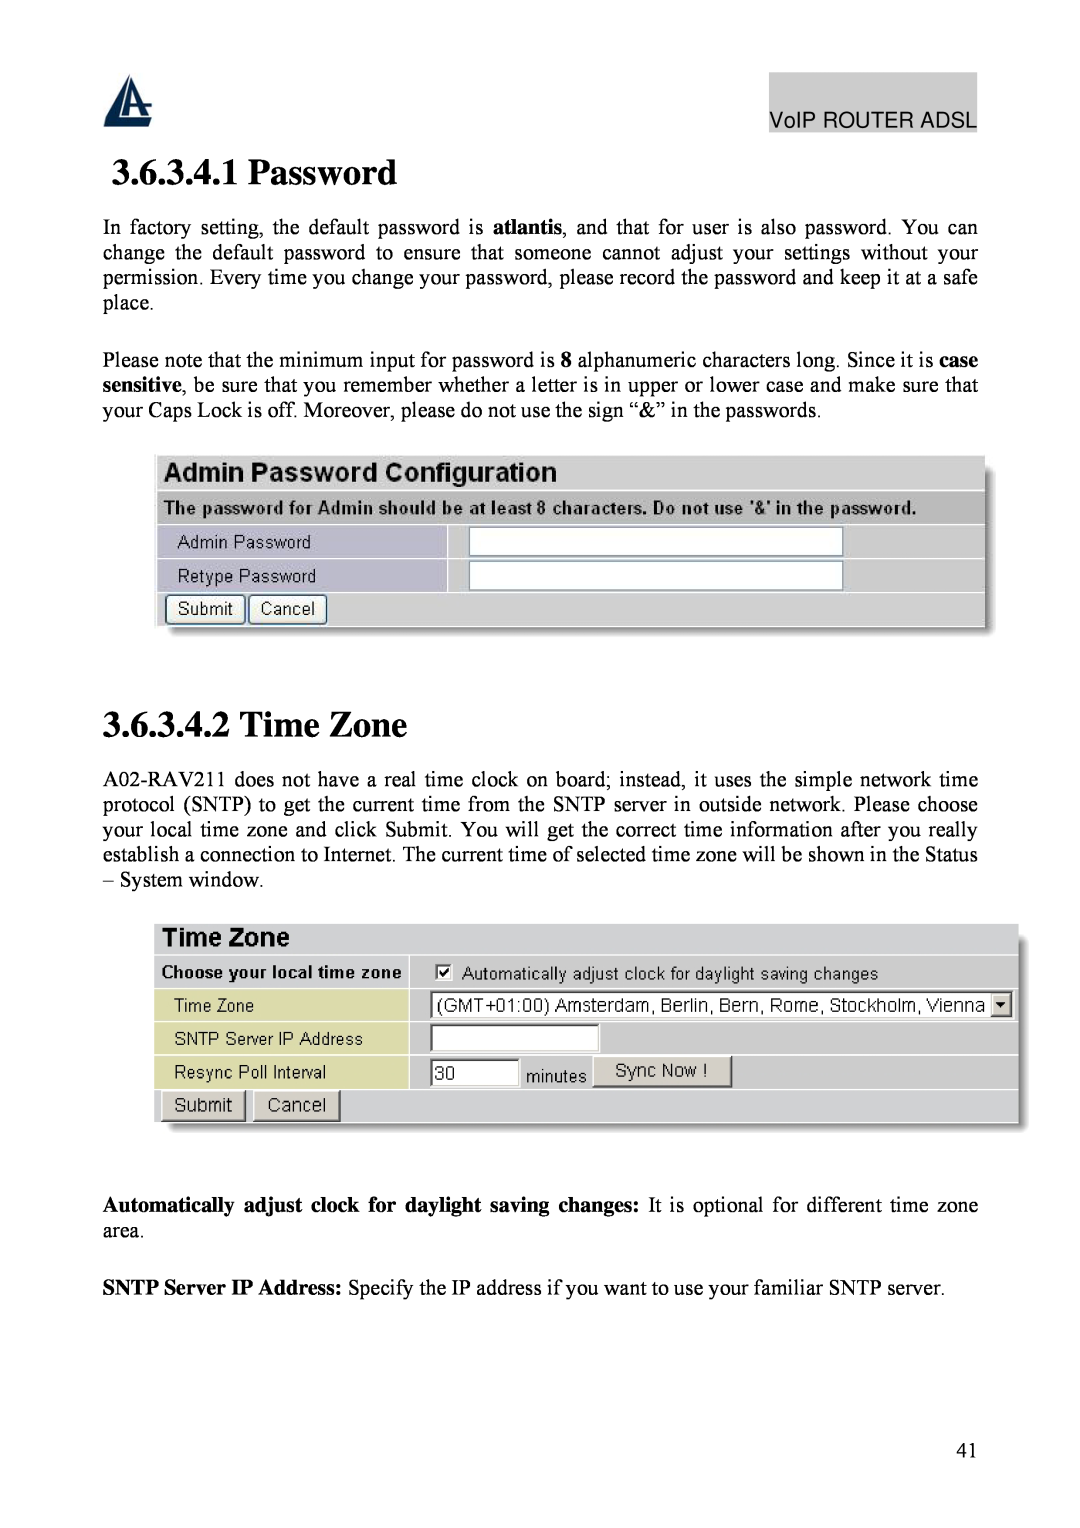 Atlantis Land A02-RAV211 manual Password, Time Zone 